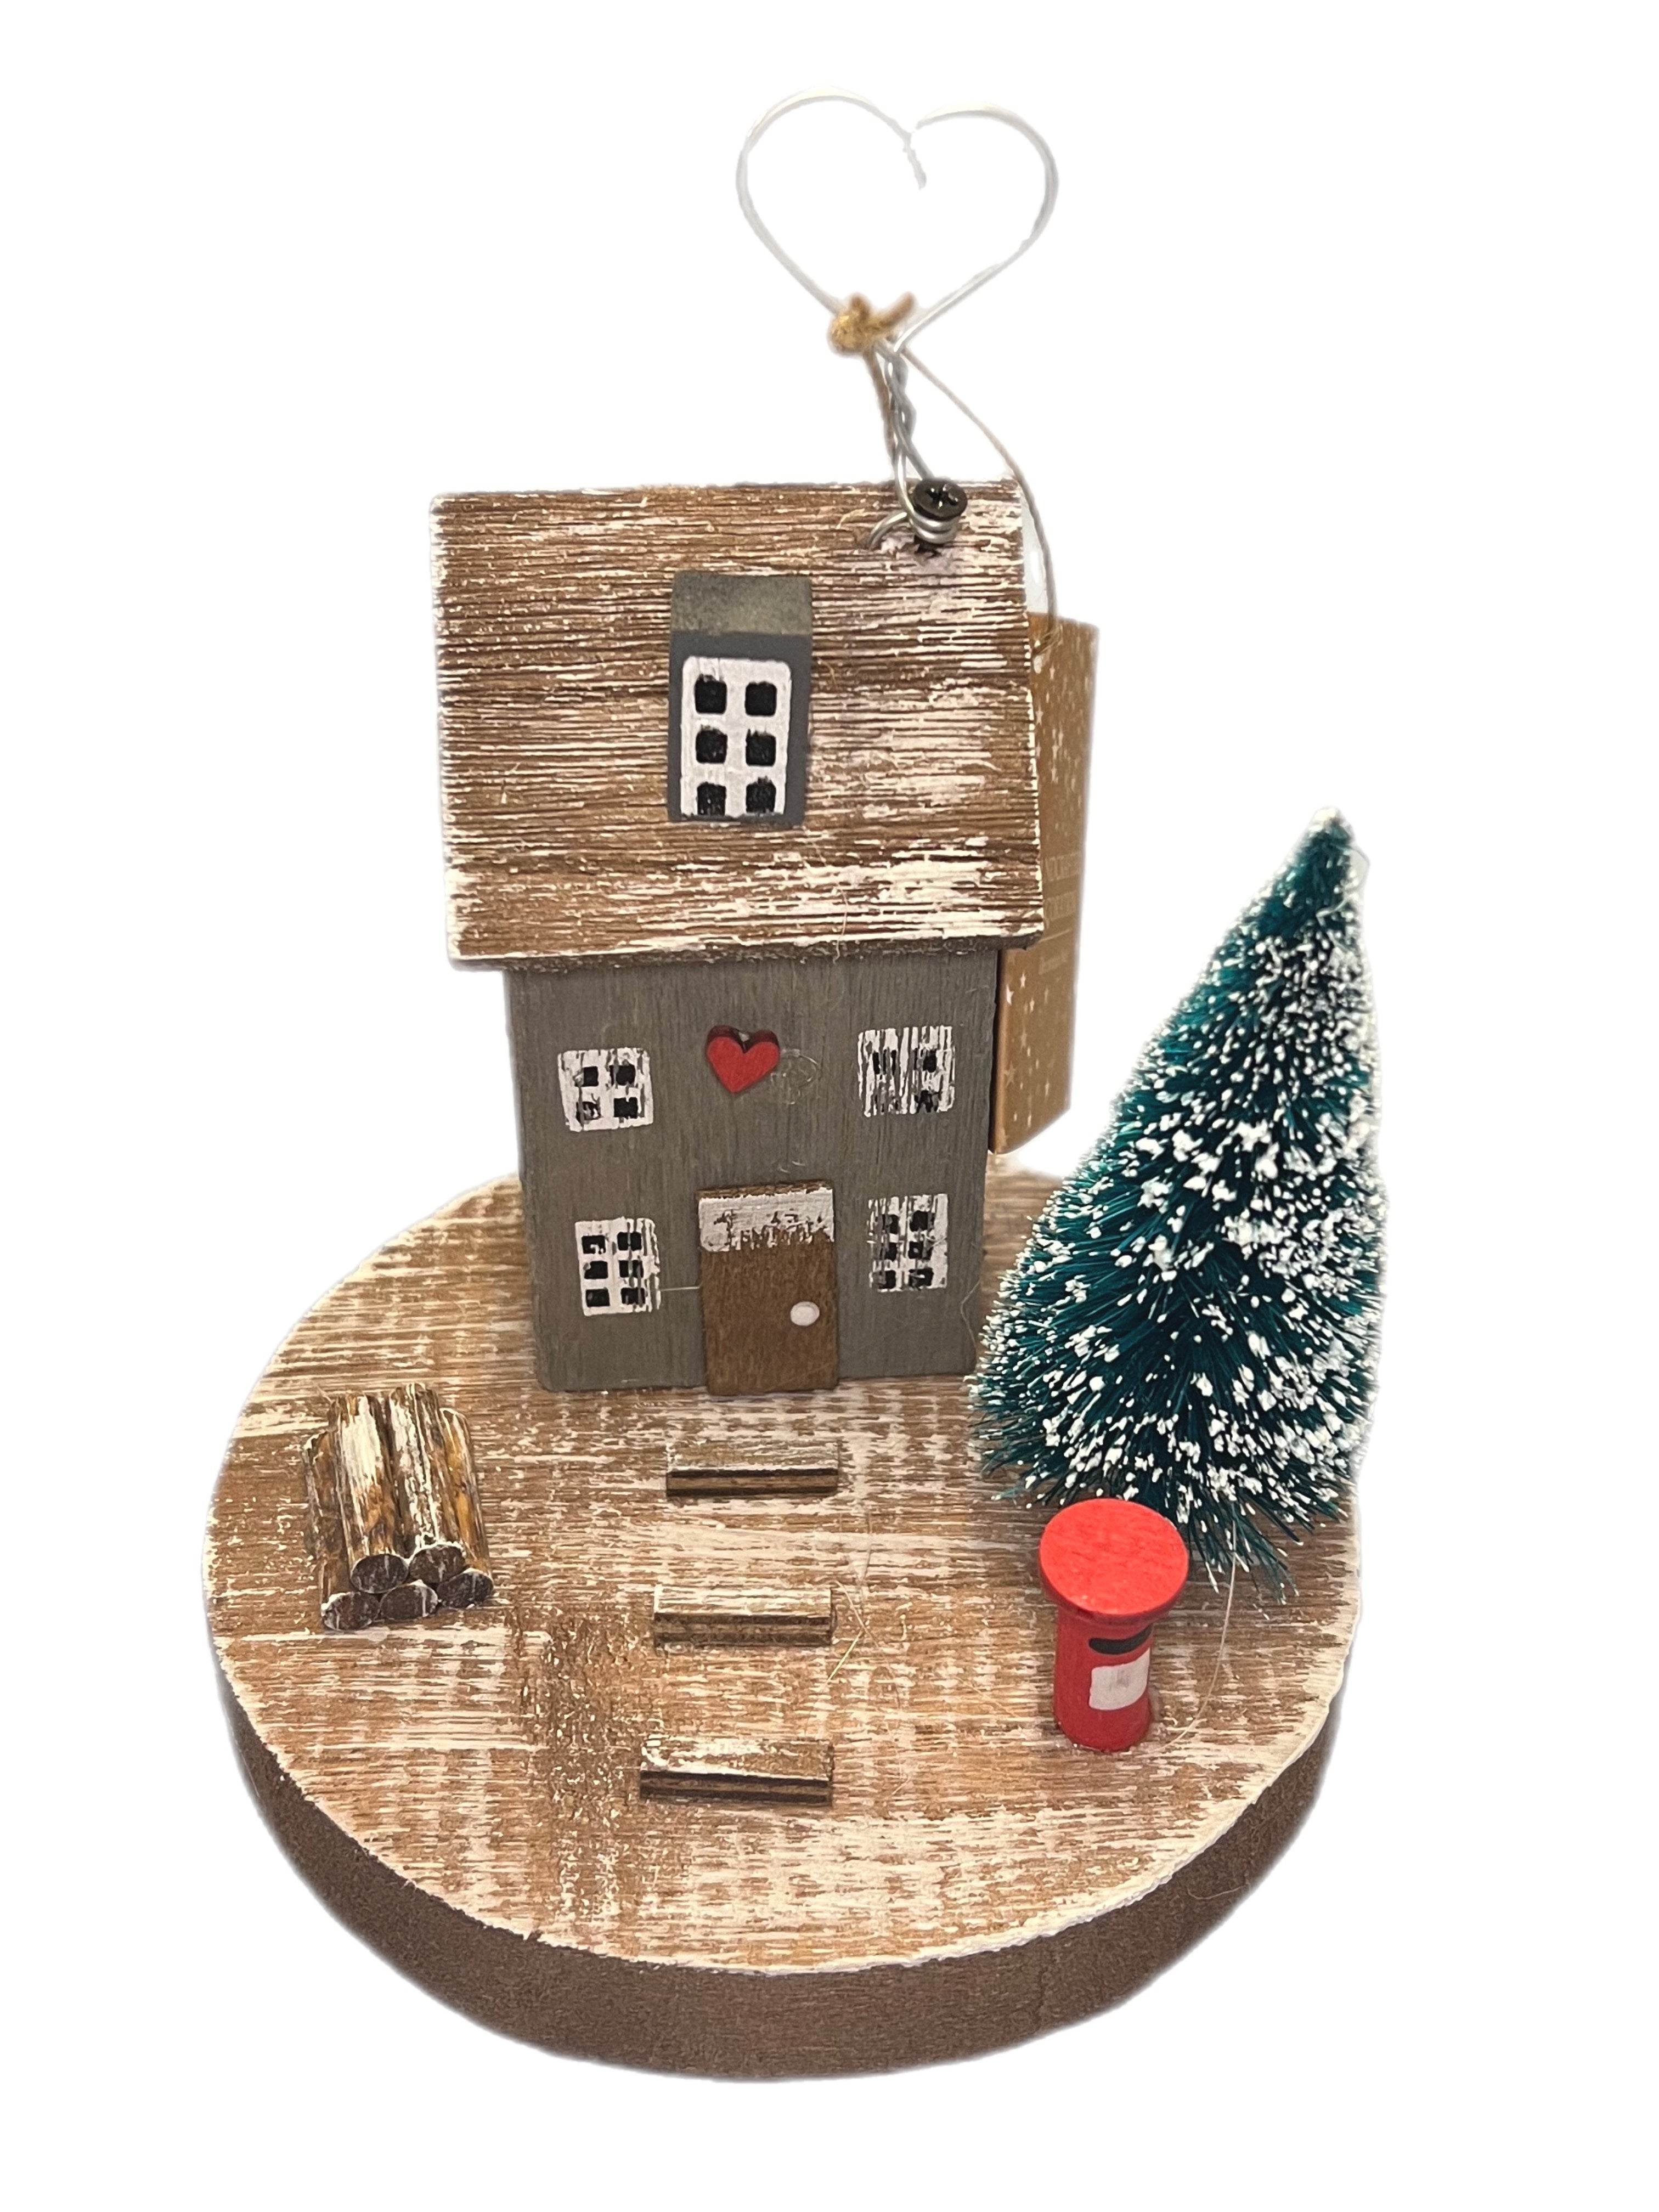 Festive Scene Christmas Decorative Wooden House Ornament